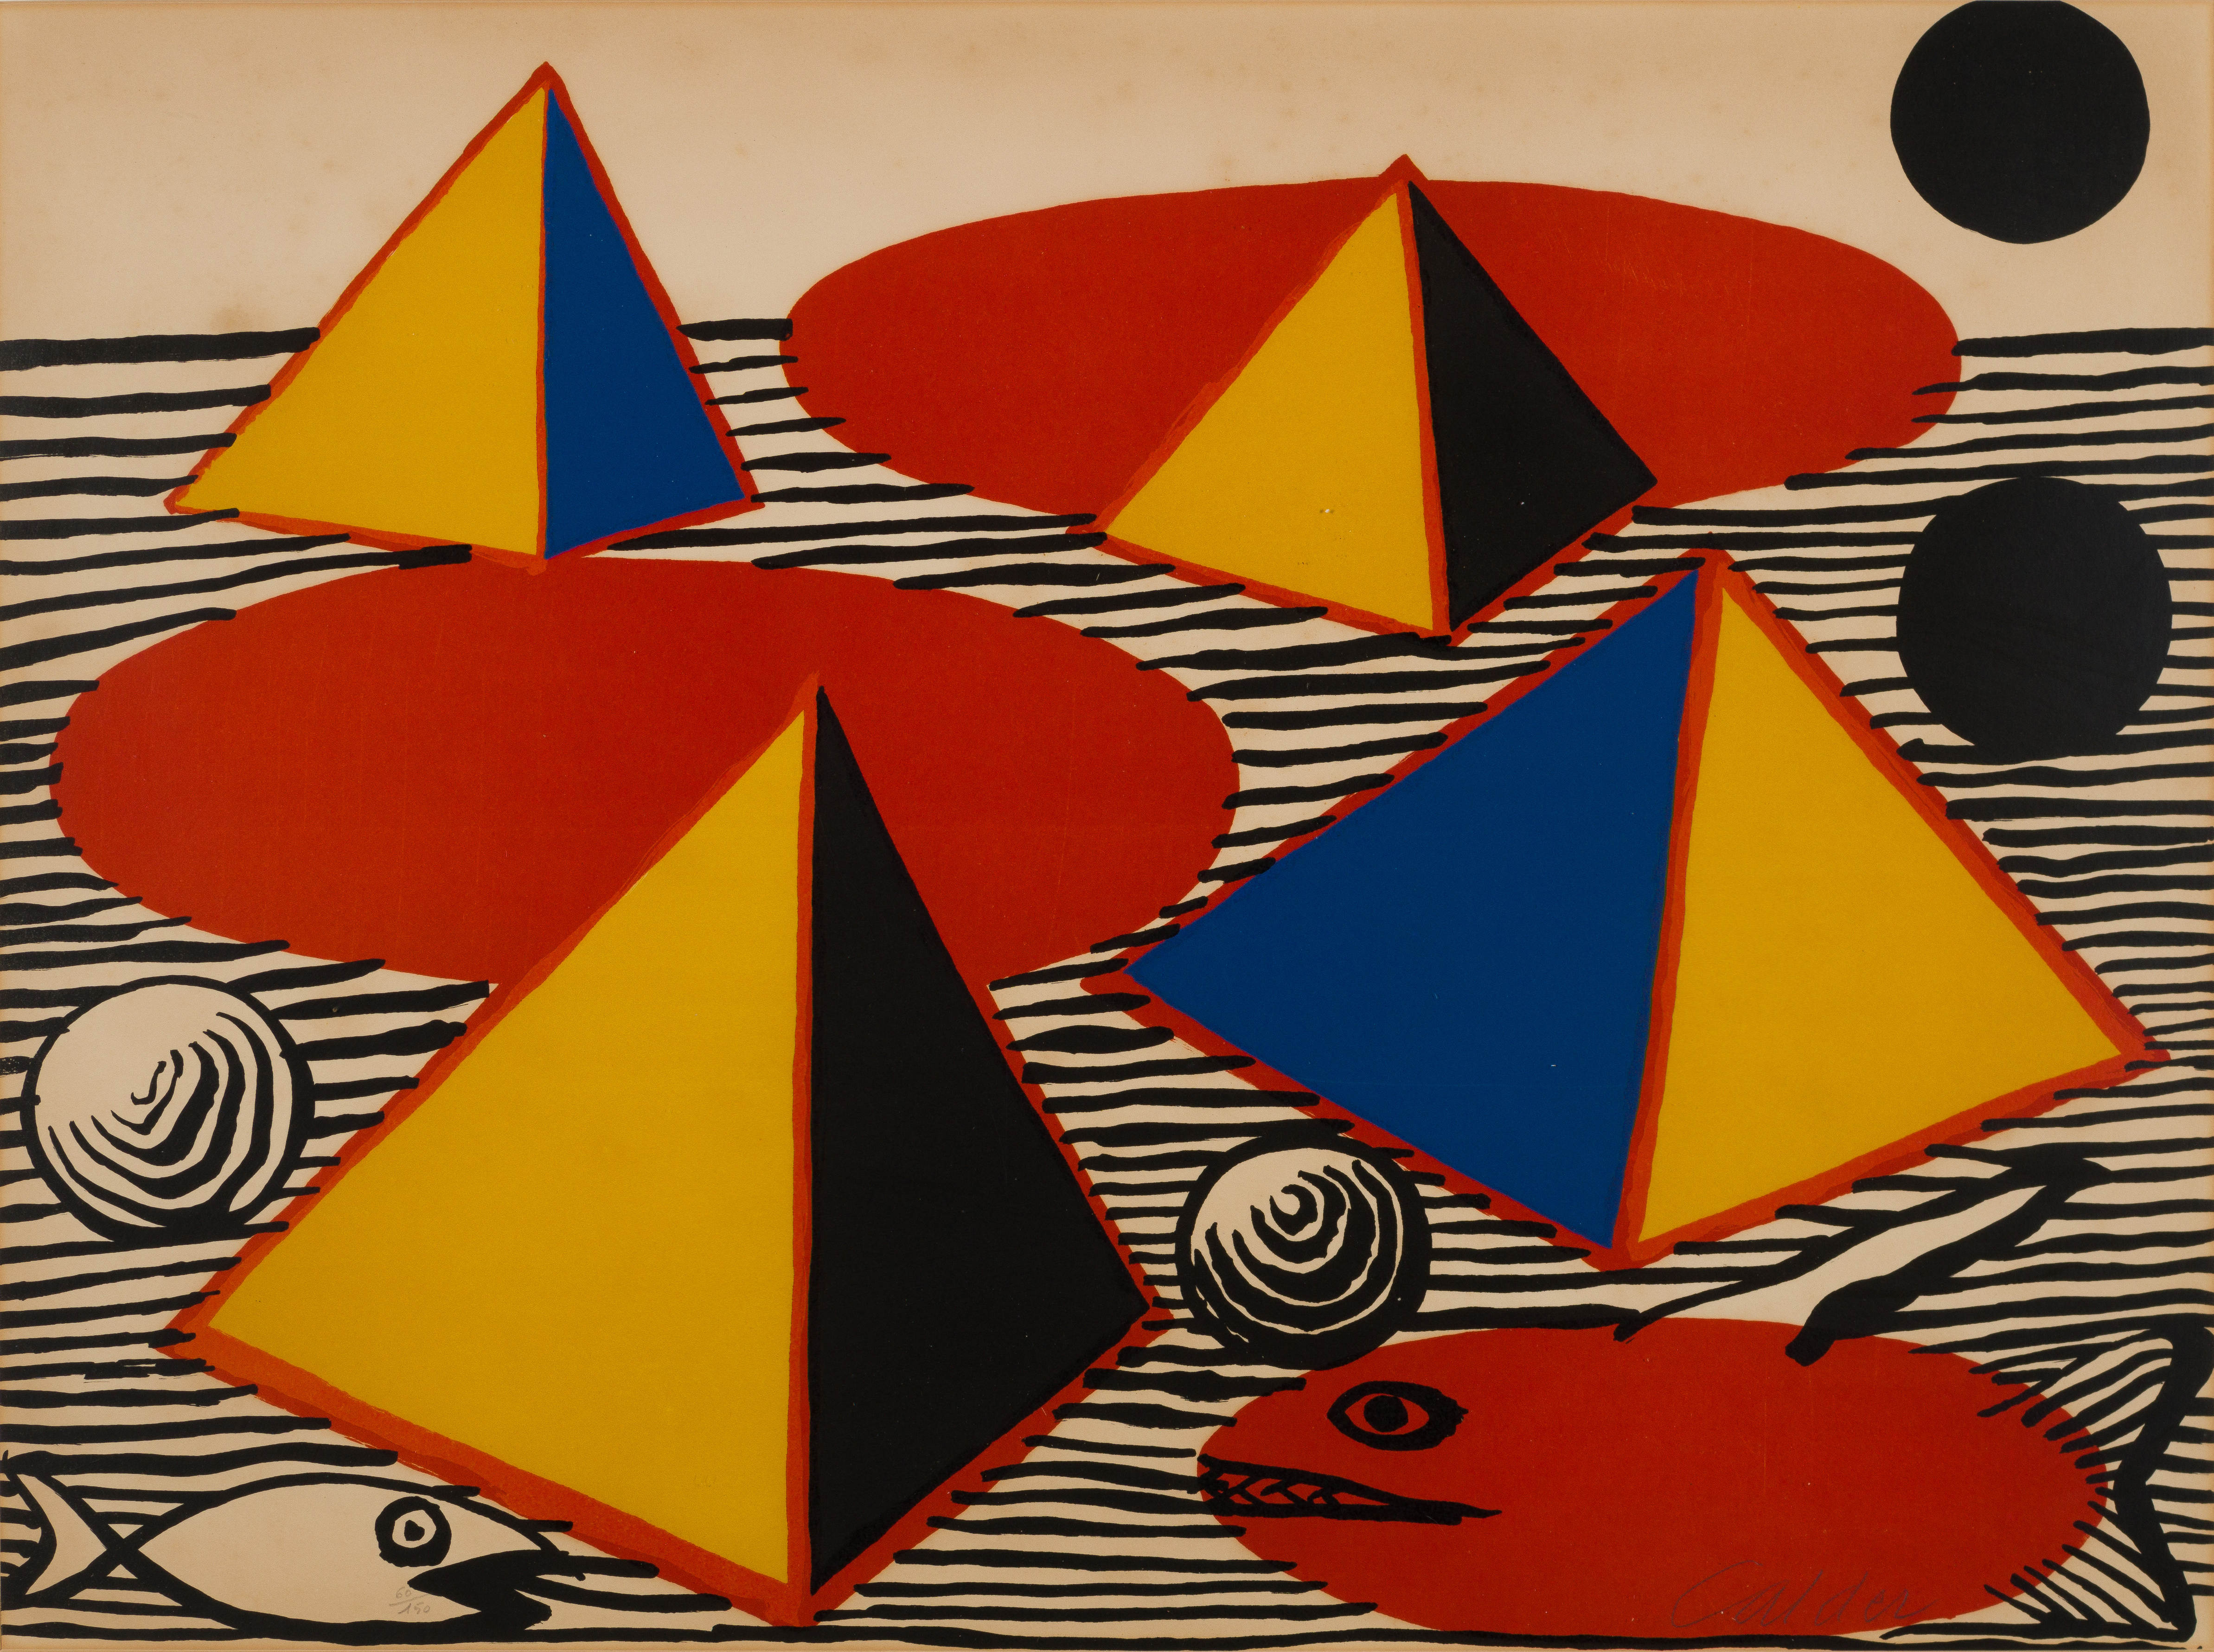 Alexander Calder; Pyramids and Fish